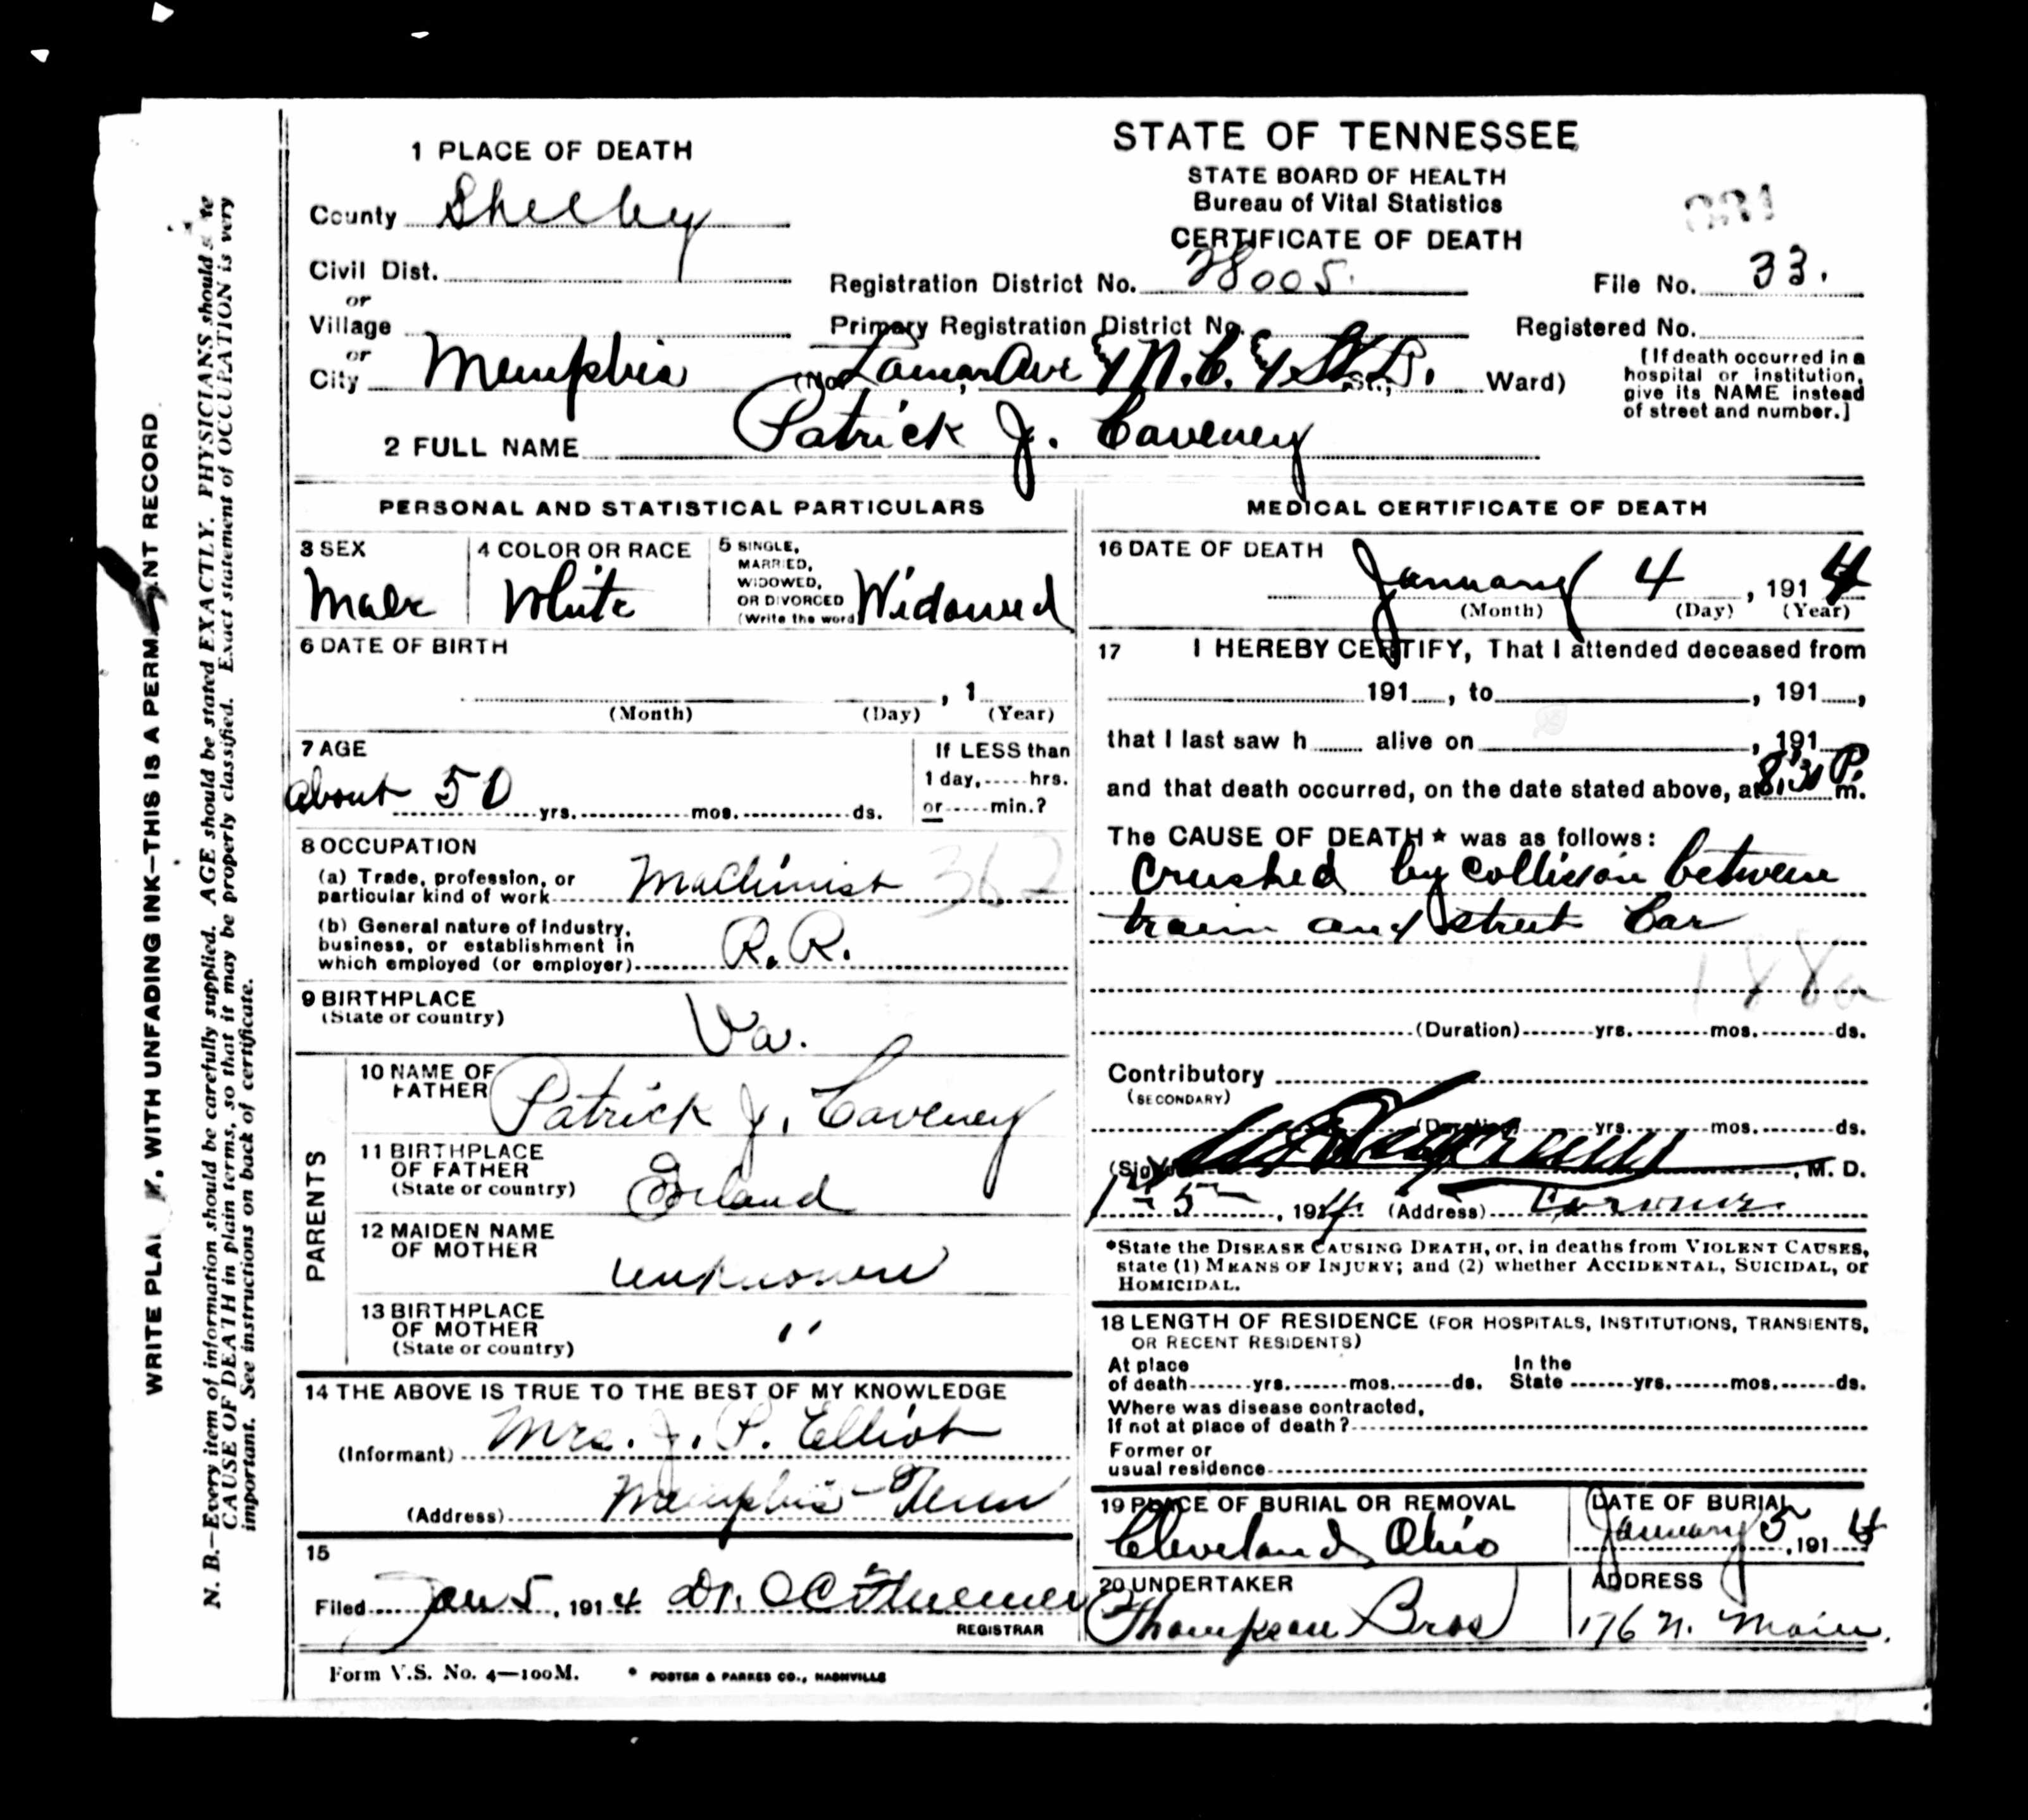 Patrick Caveney death certificate. Informant: daughter Margaret Mary "Marie" Elliot